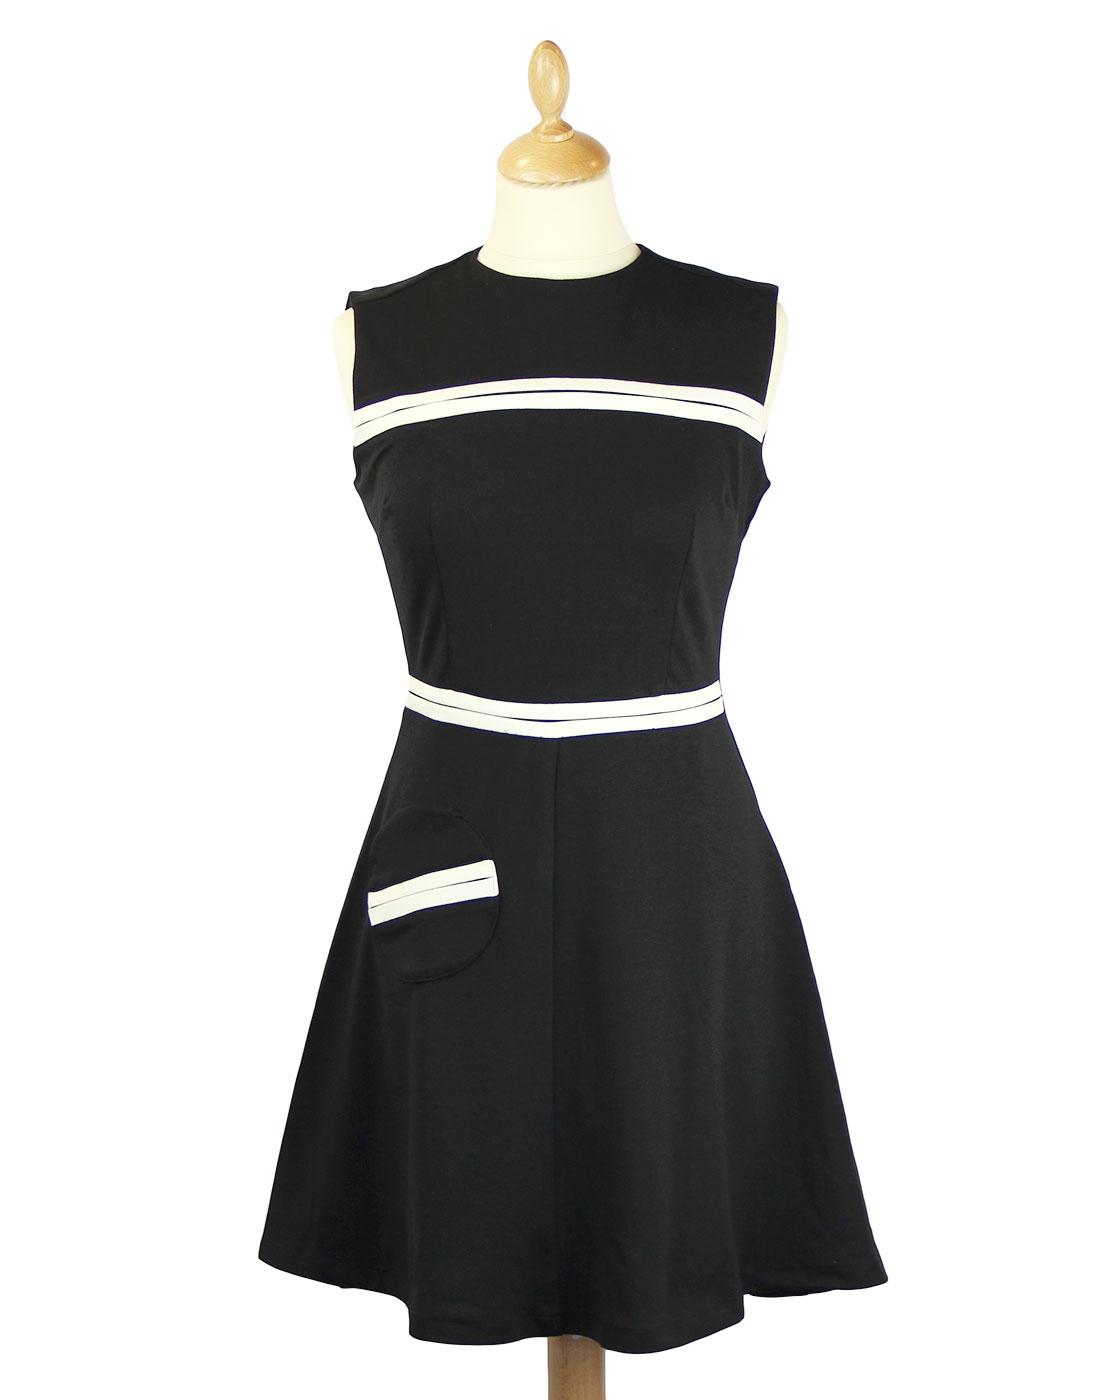 Lyla Retro 1960s Mod Circle Pocket Dress in Black